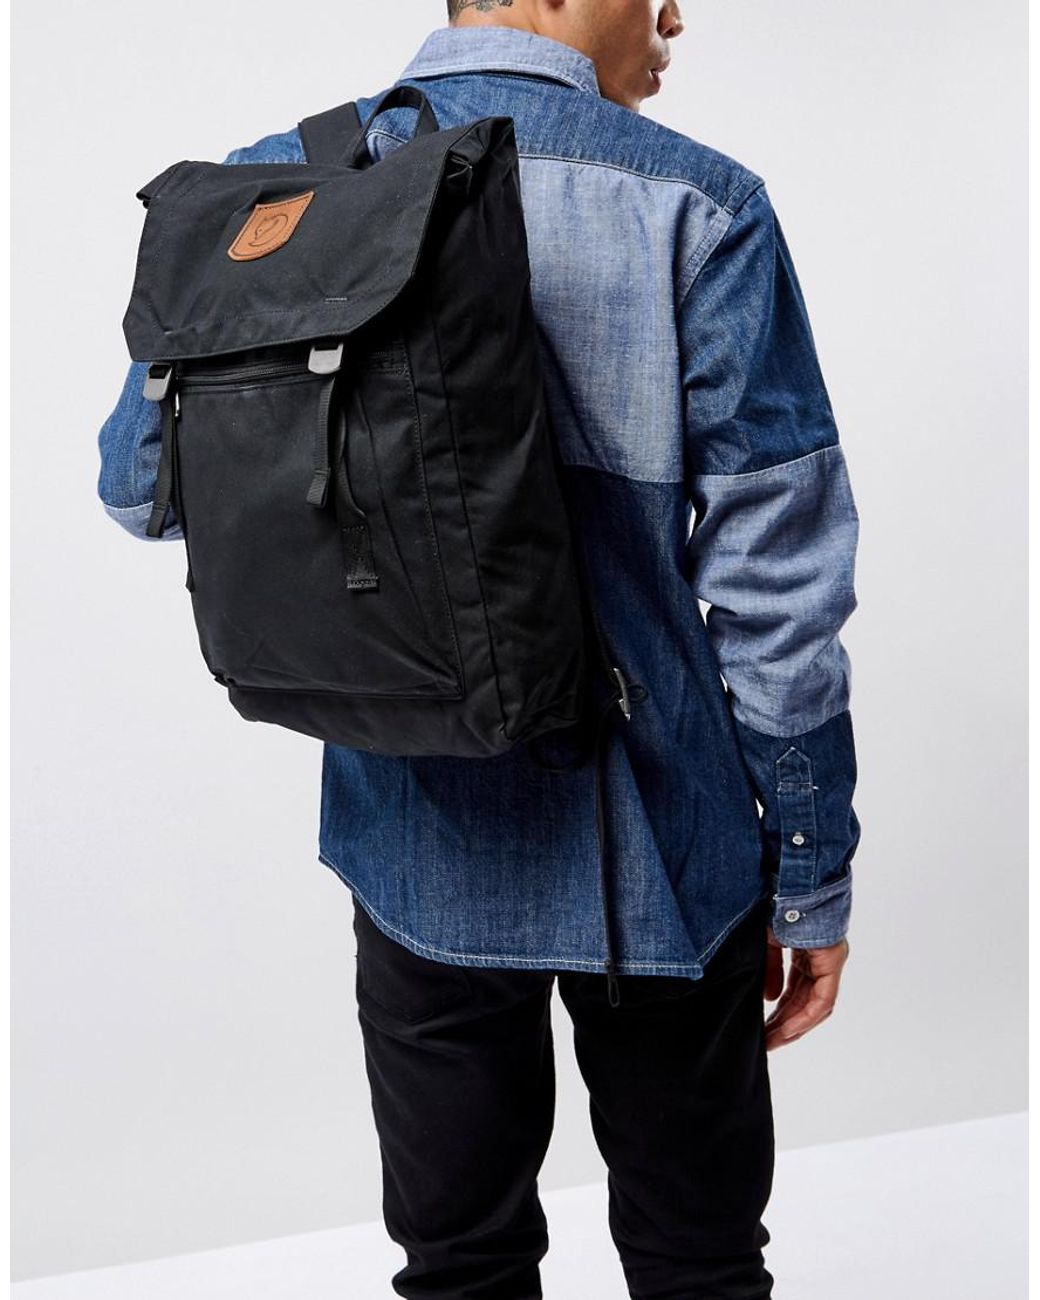 Foldsack No1 Backpack In Black | Lyst